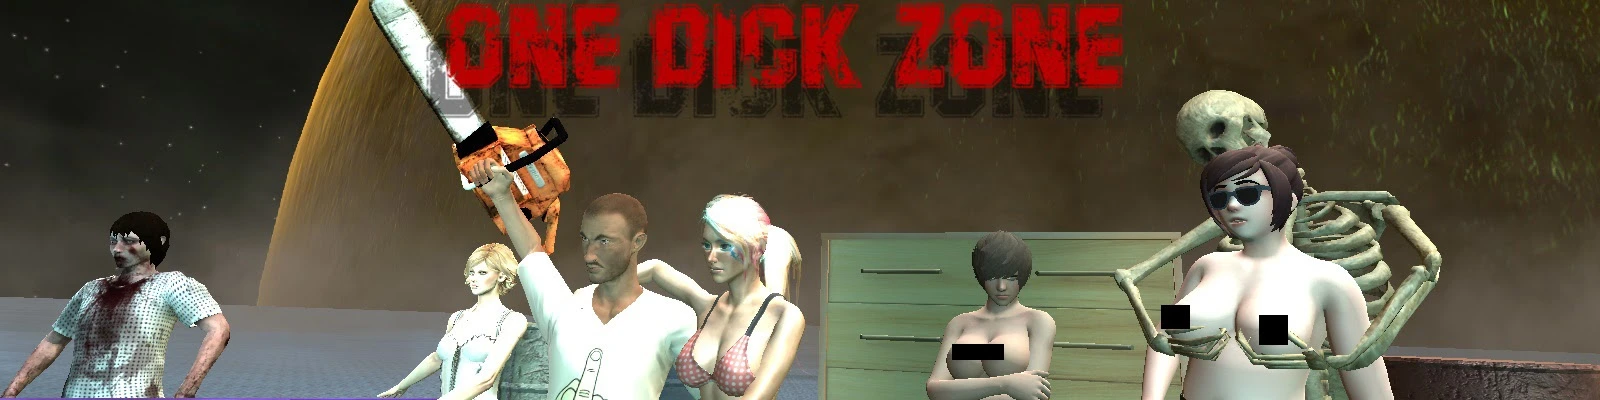 One Dick Zone [v0.1] main image